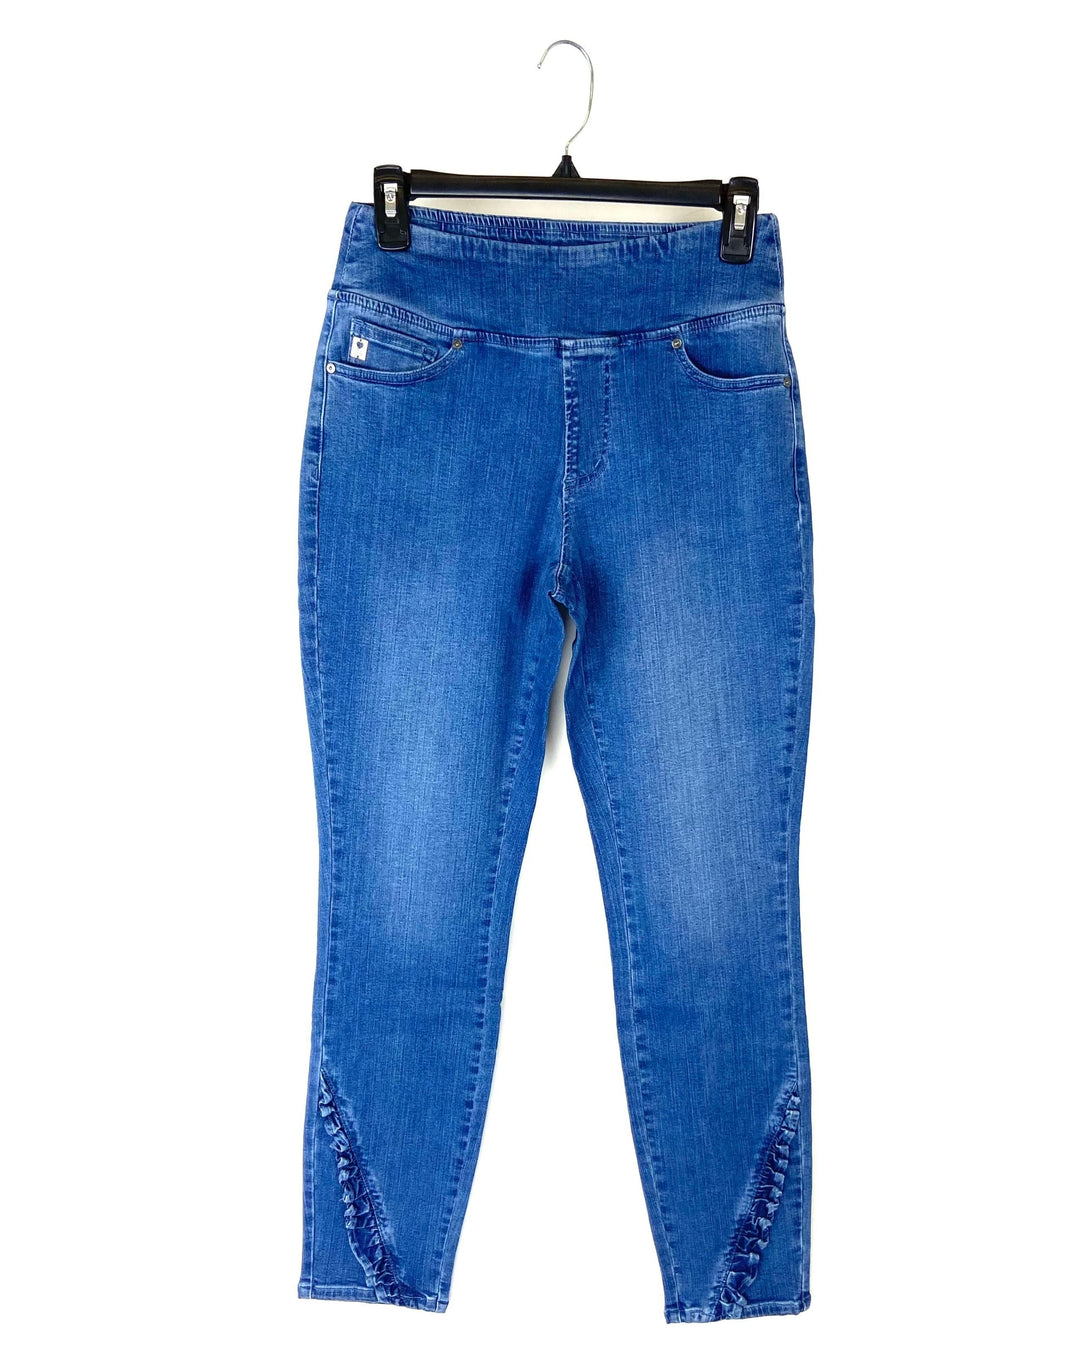 Medium Wash Ruffle Design Jeans - Size 12/14